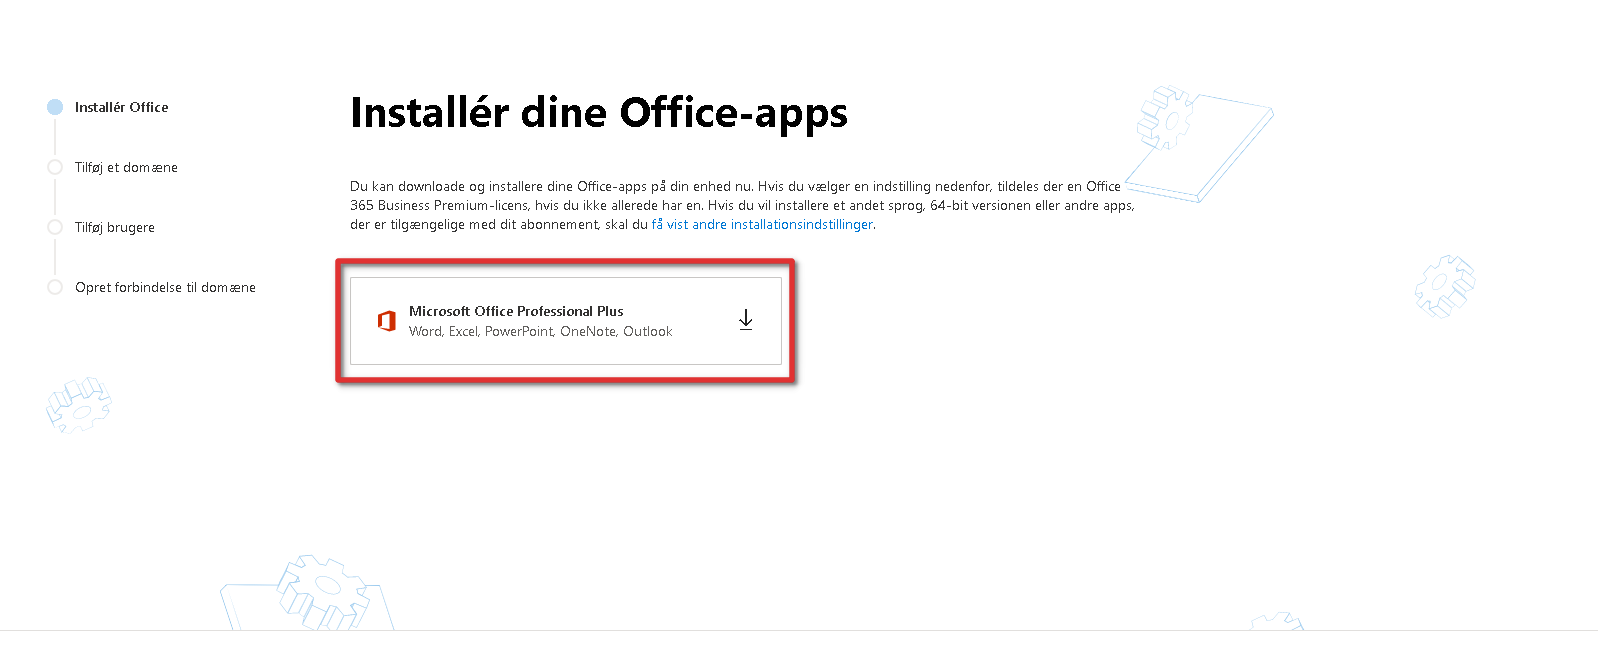 5microsoft_installer_dine_office_apps